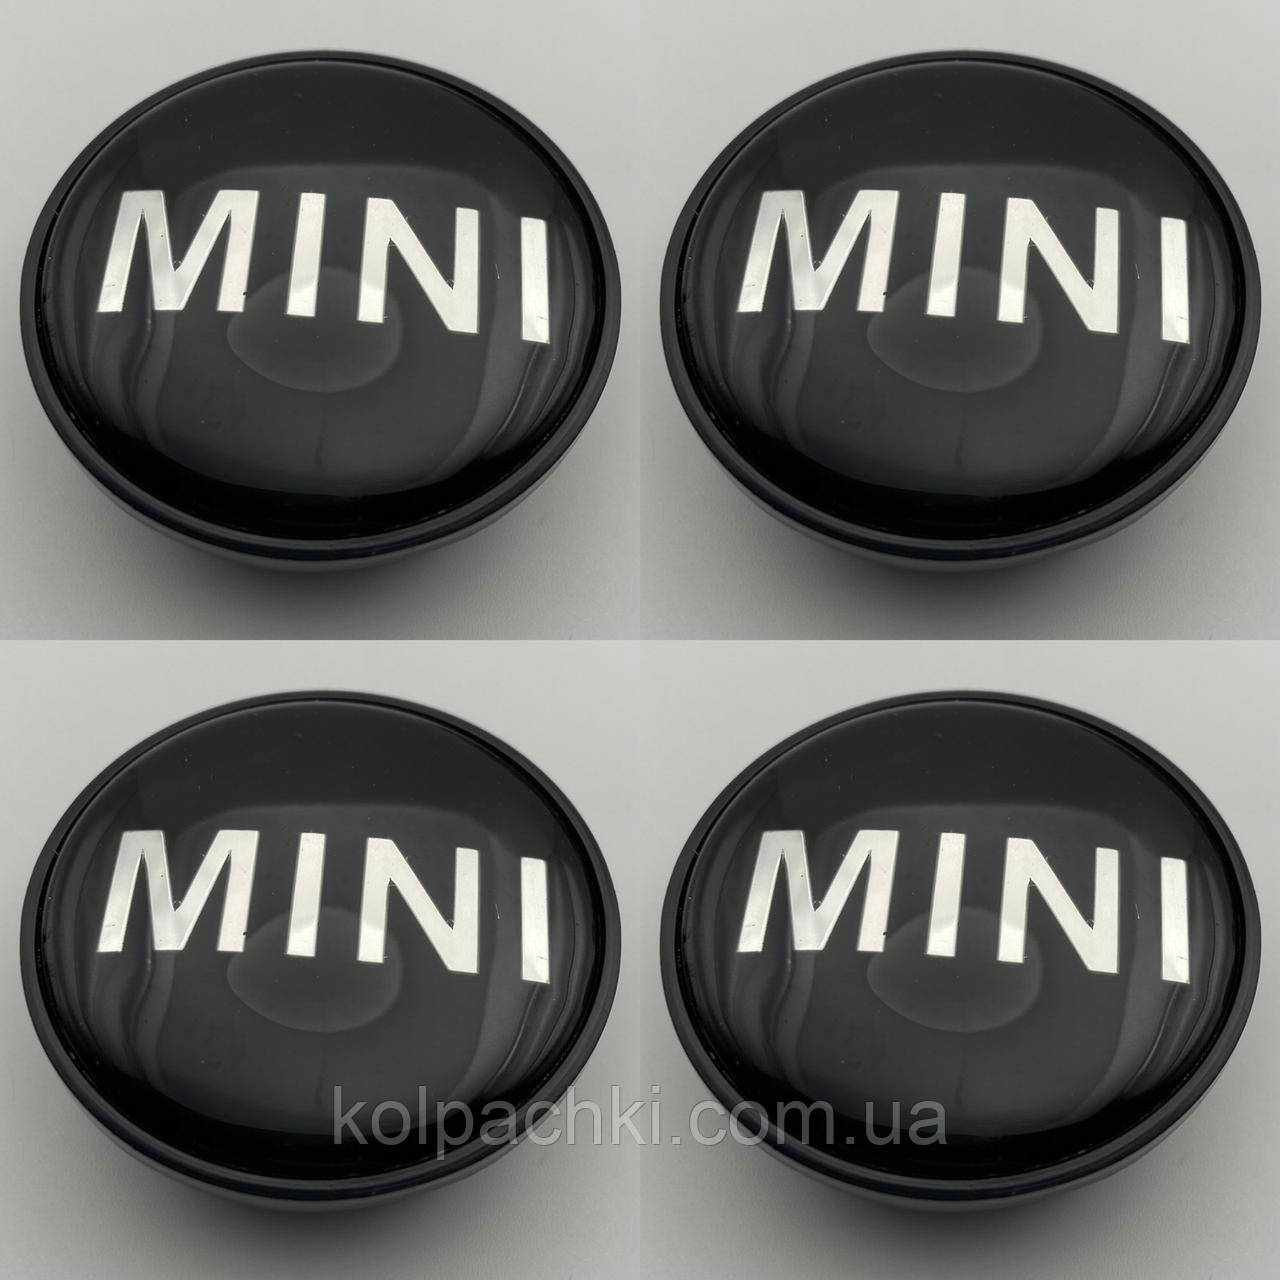 Ковпачки на литі диски Mini Cooper 3613-1171 069 55 мм 45 мм